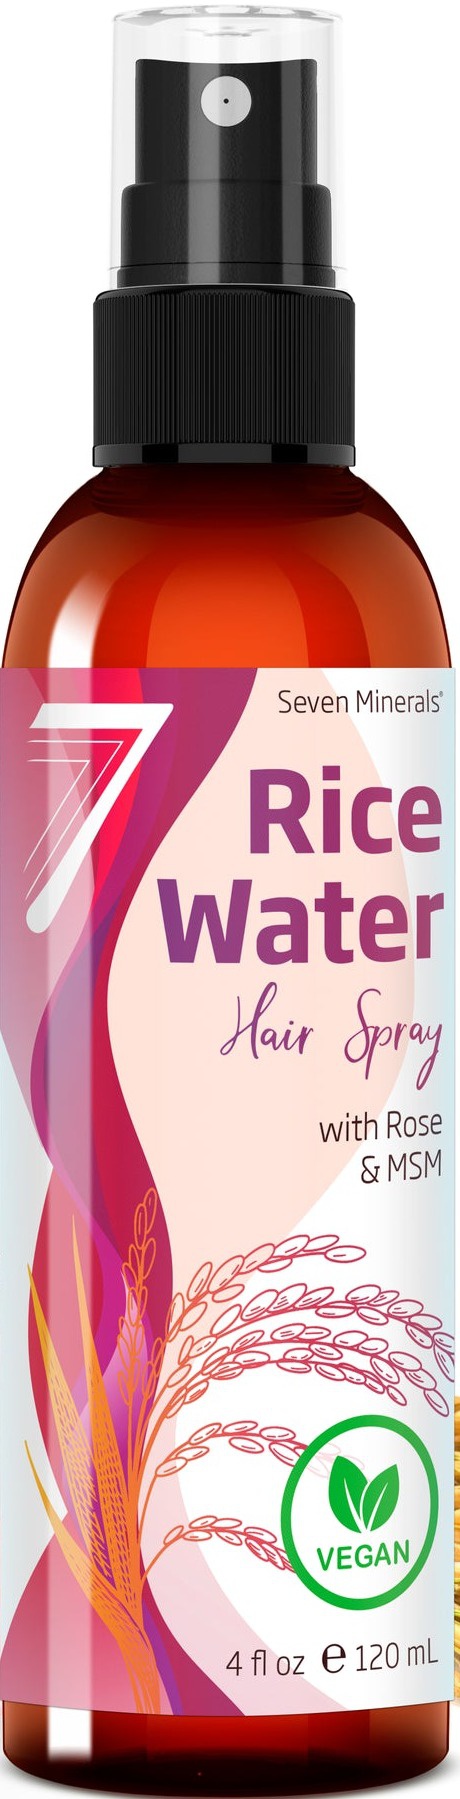 Seven Minerals Rose Rice Water Spray